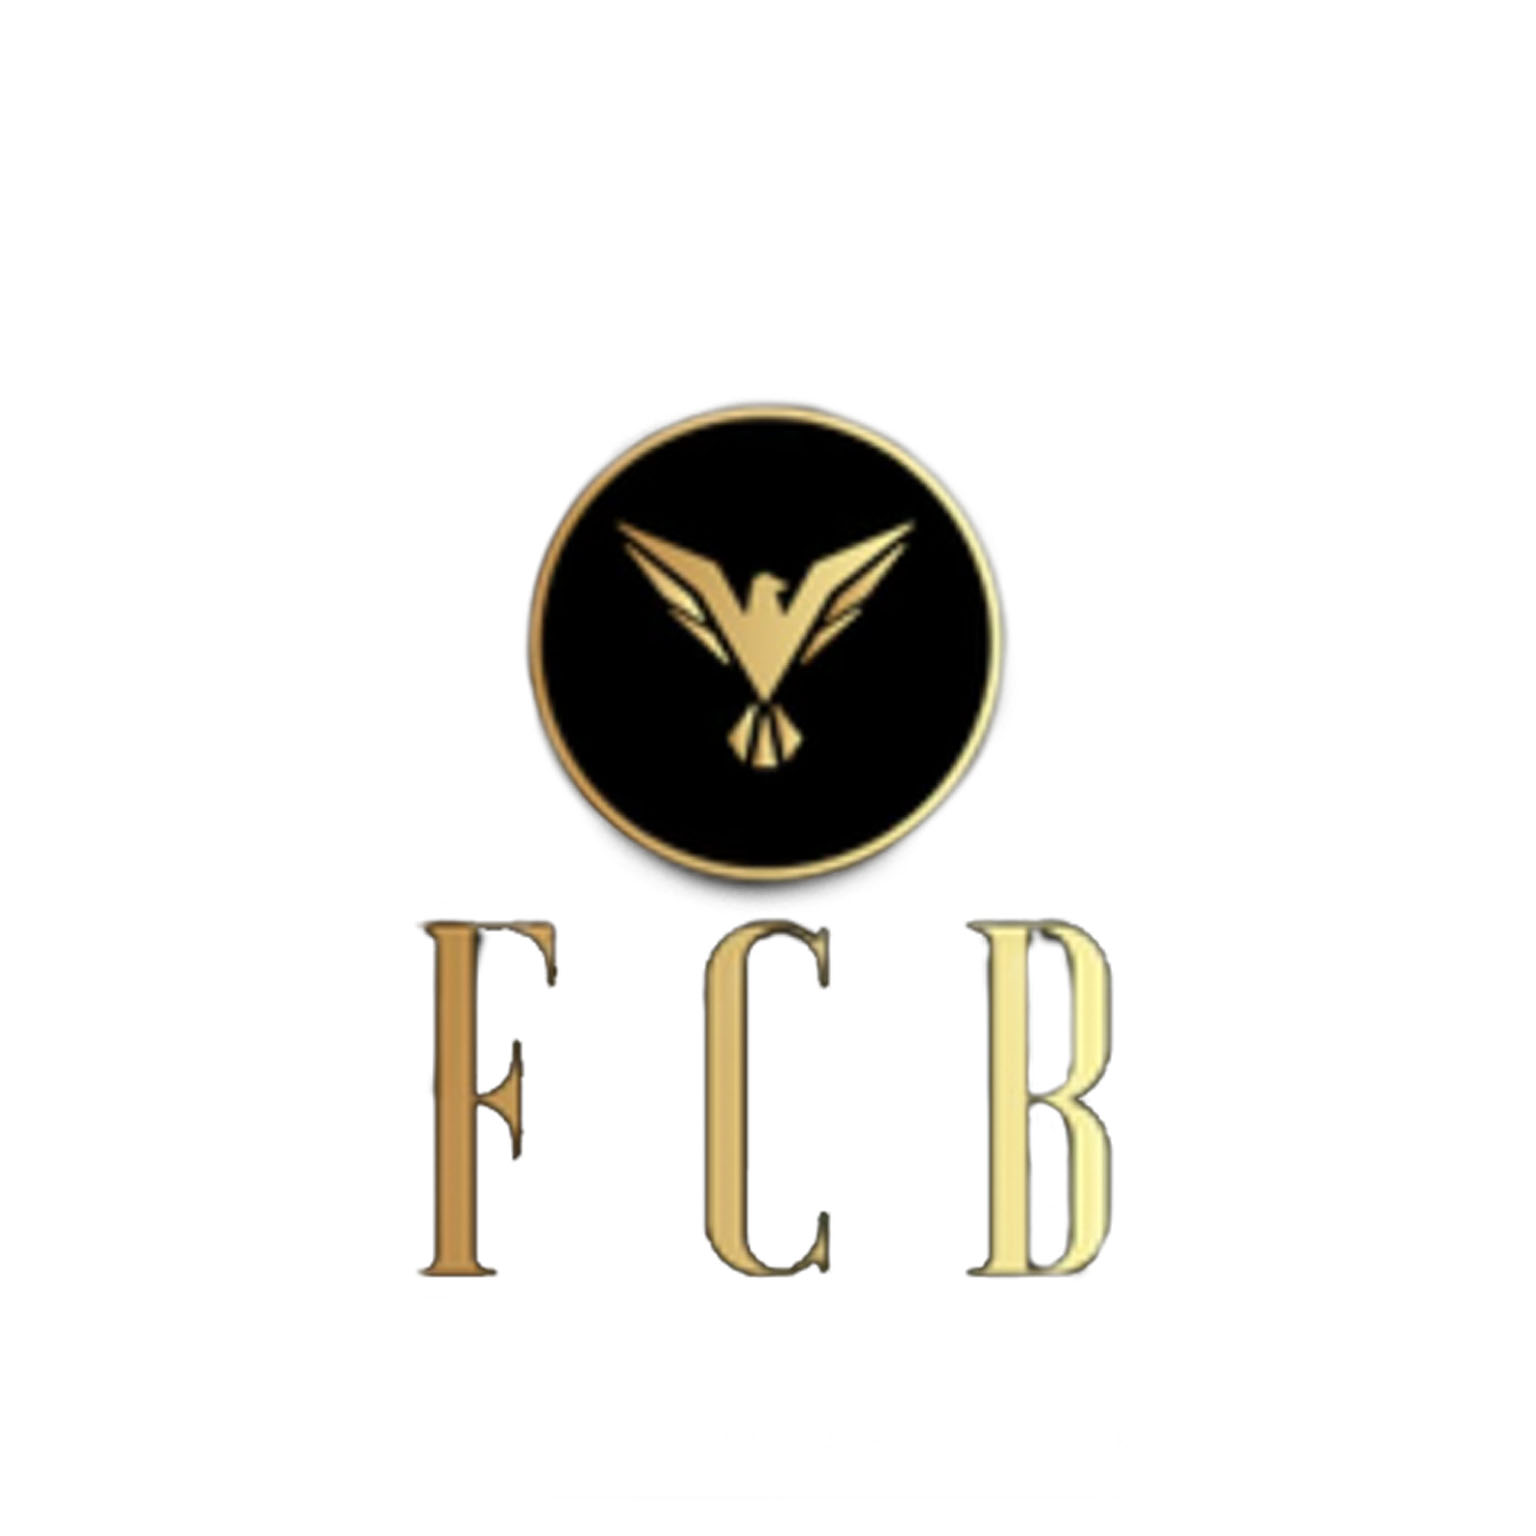 FCB Logo